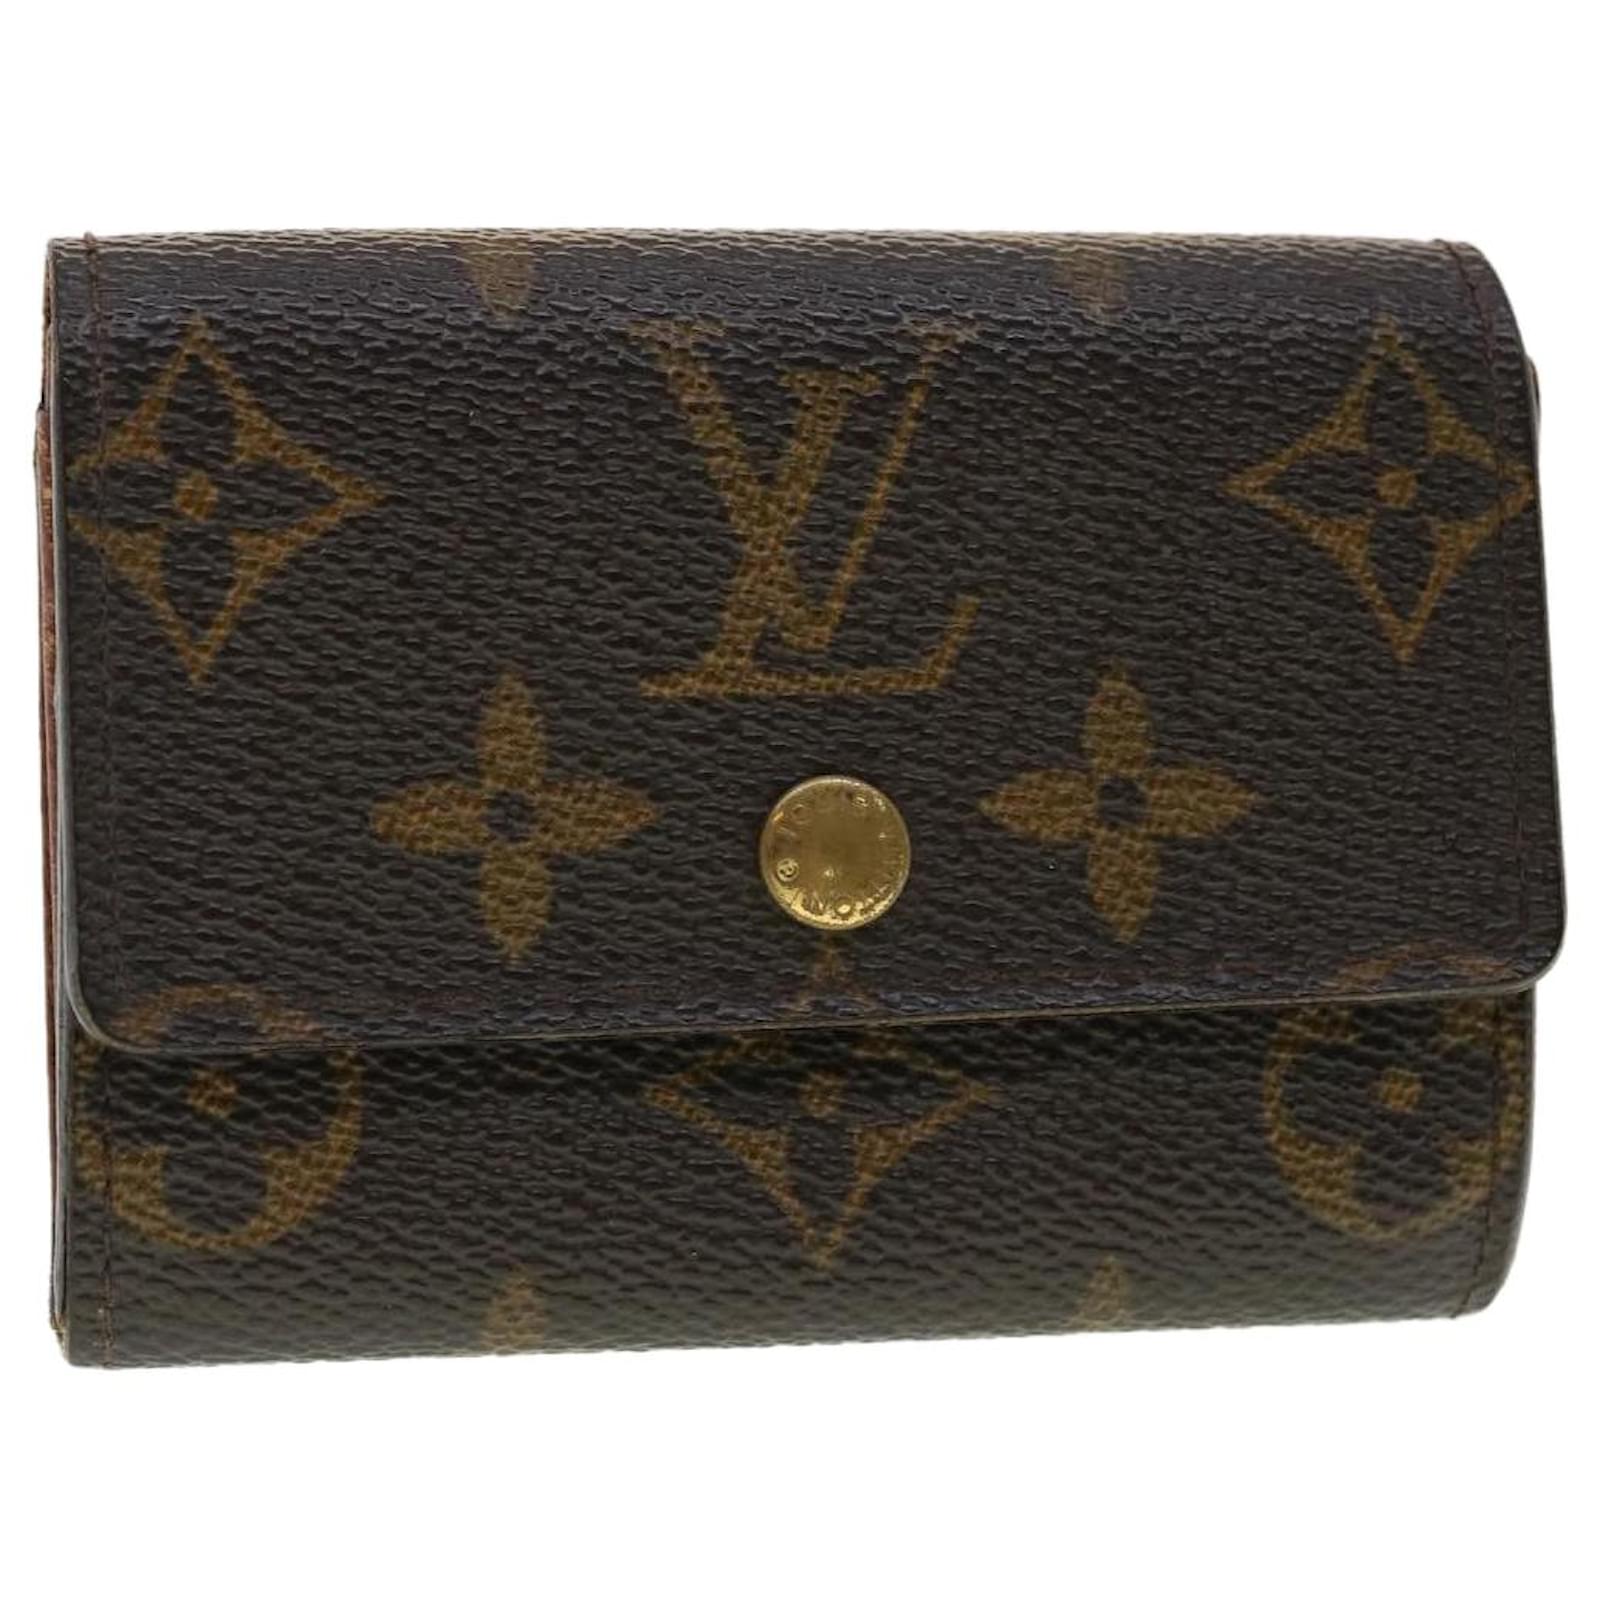 Black Louis Vuitton Vernis Leather Ludlow Wallet For Sale at